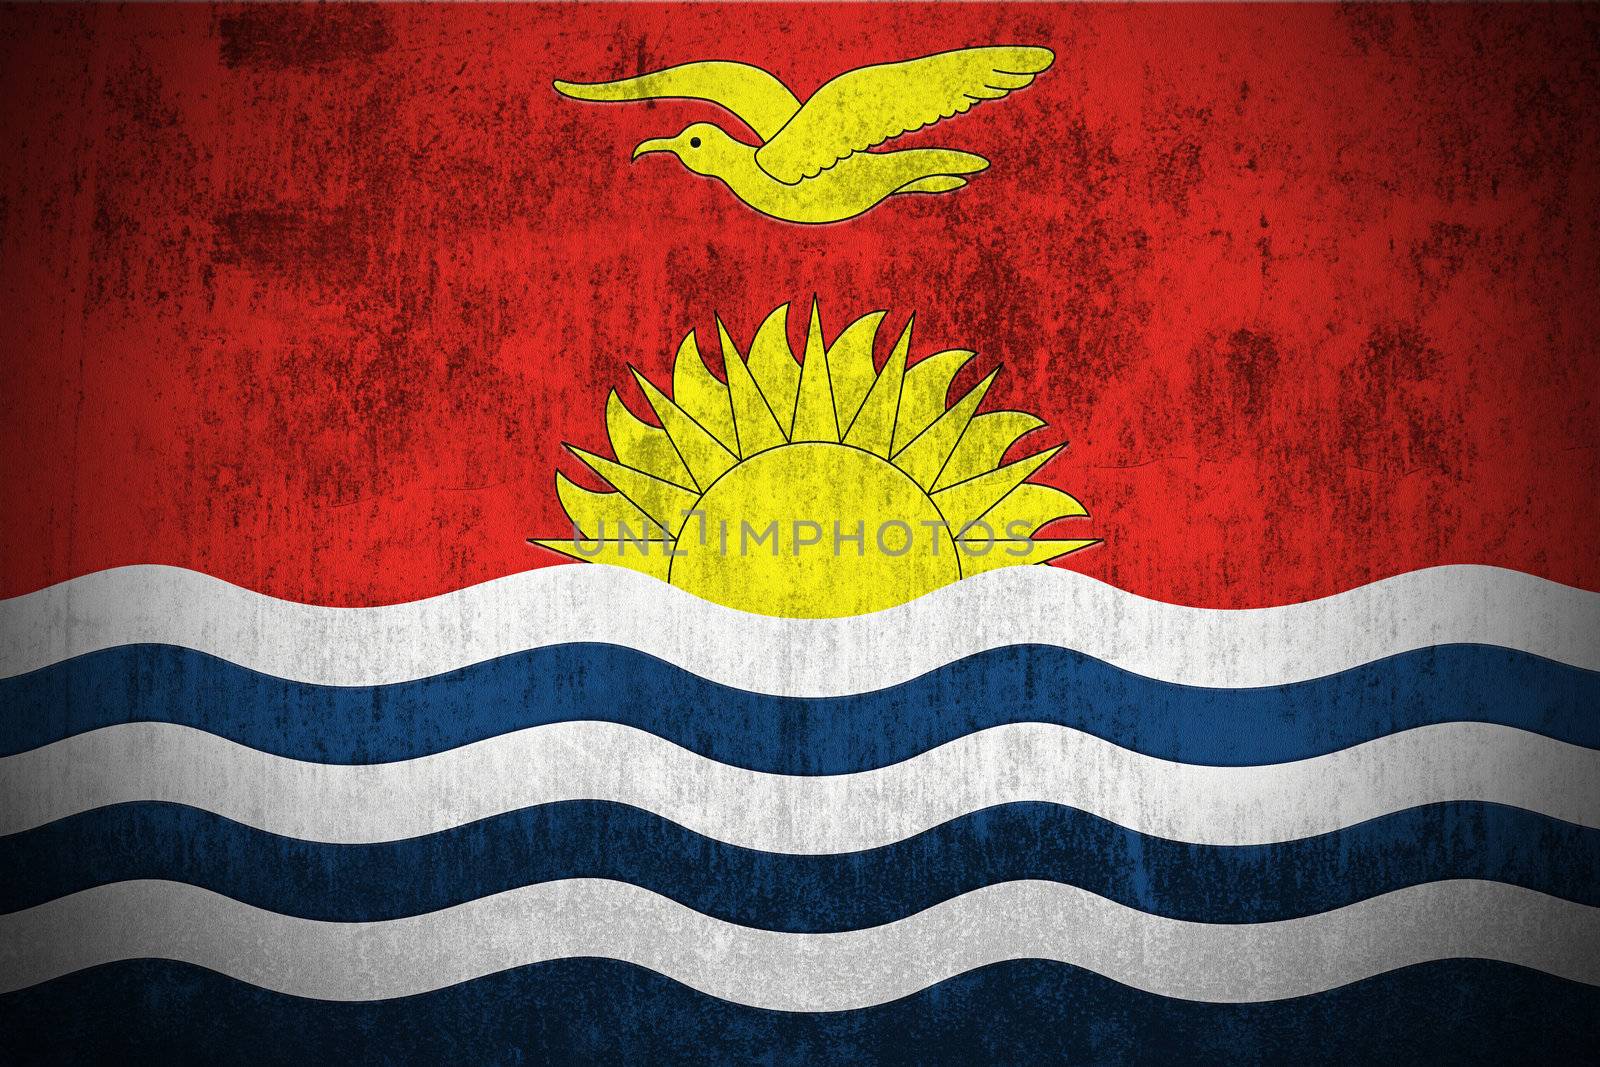 Weathered Flag Of Kiribati, fabric textured
